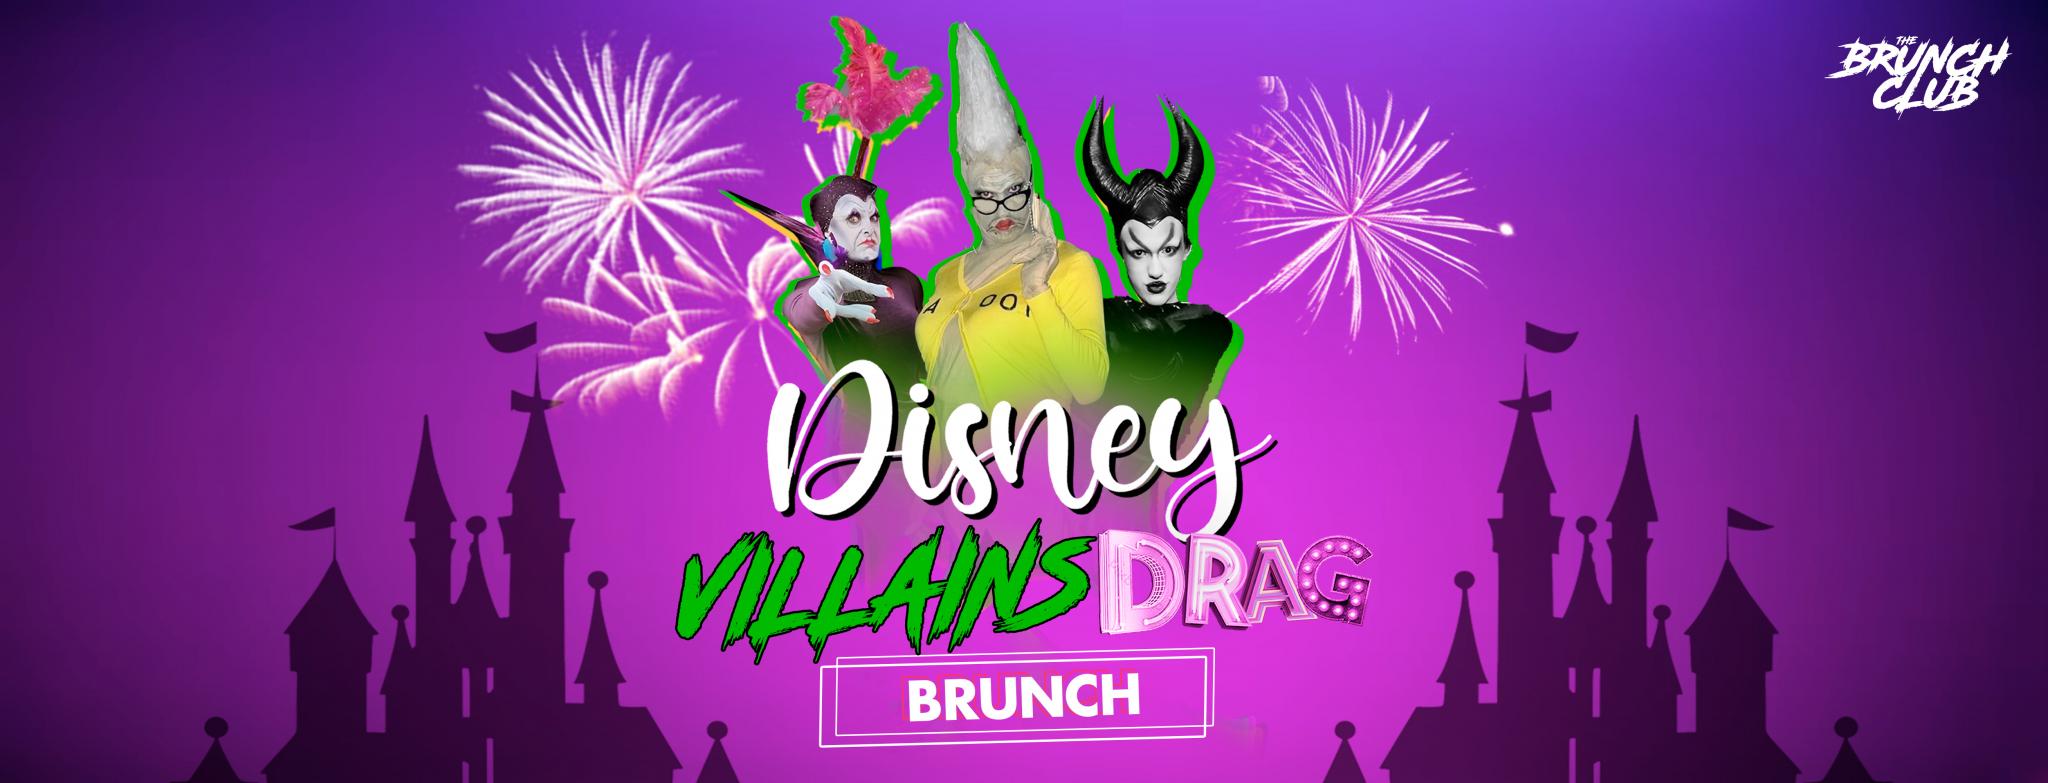 Disney Villains Drag Bottomless Brunch - Brighton